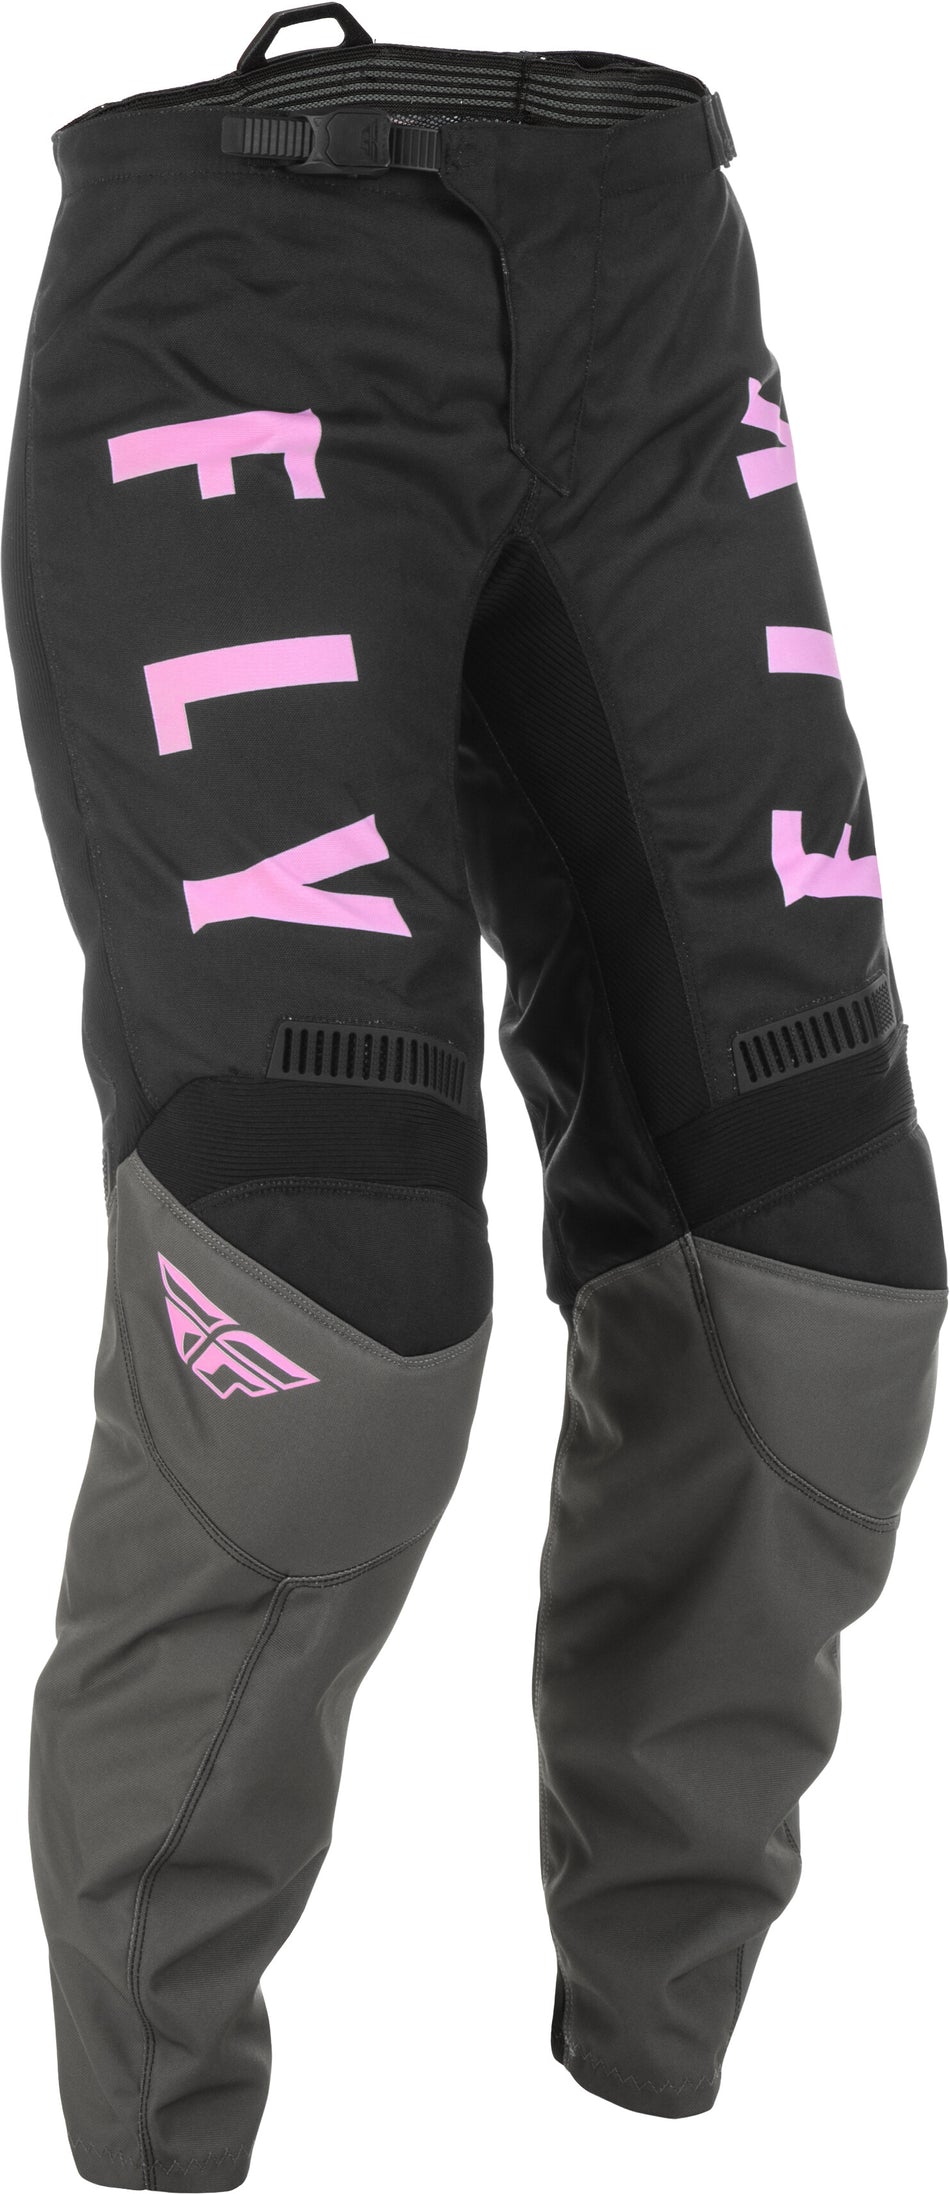 FLY RACING Women's F-16 Pants Grey/Black/Pink Sz 11/12 375-83109